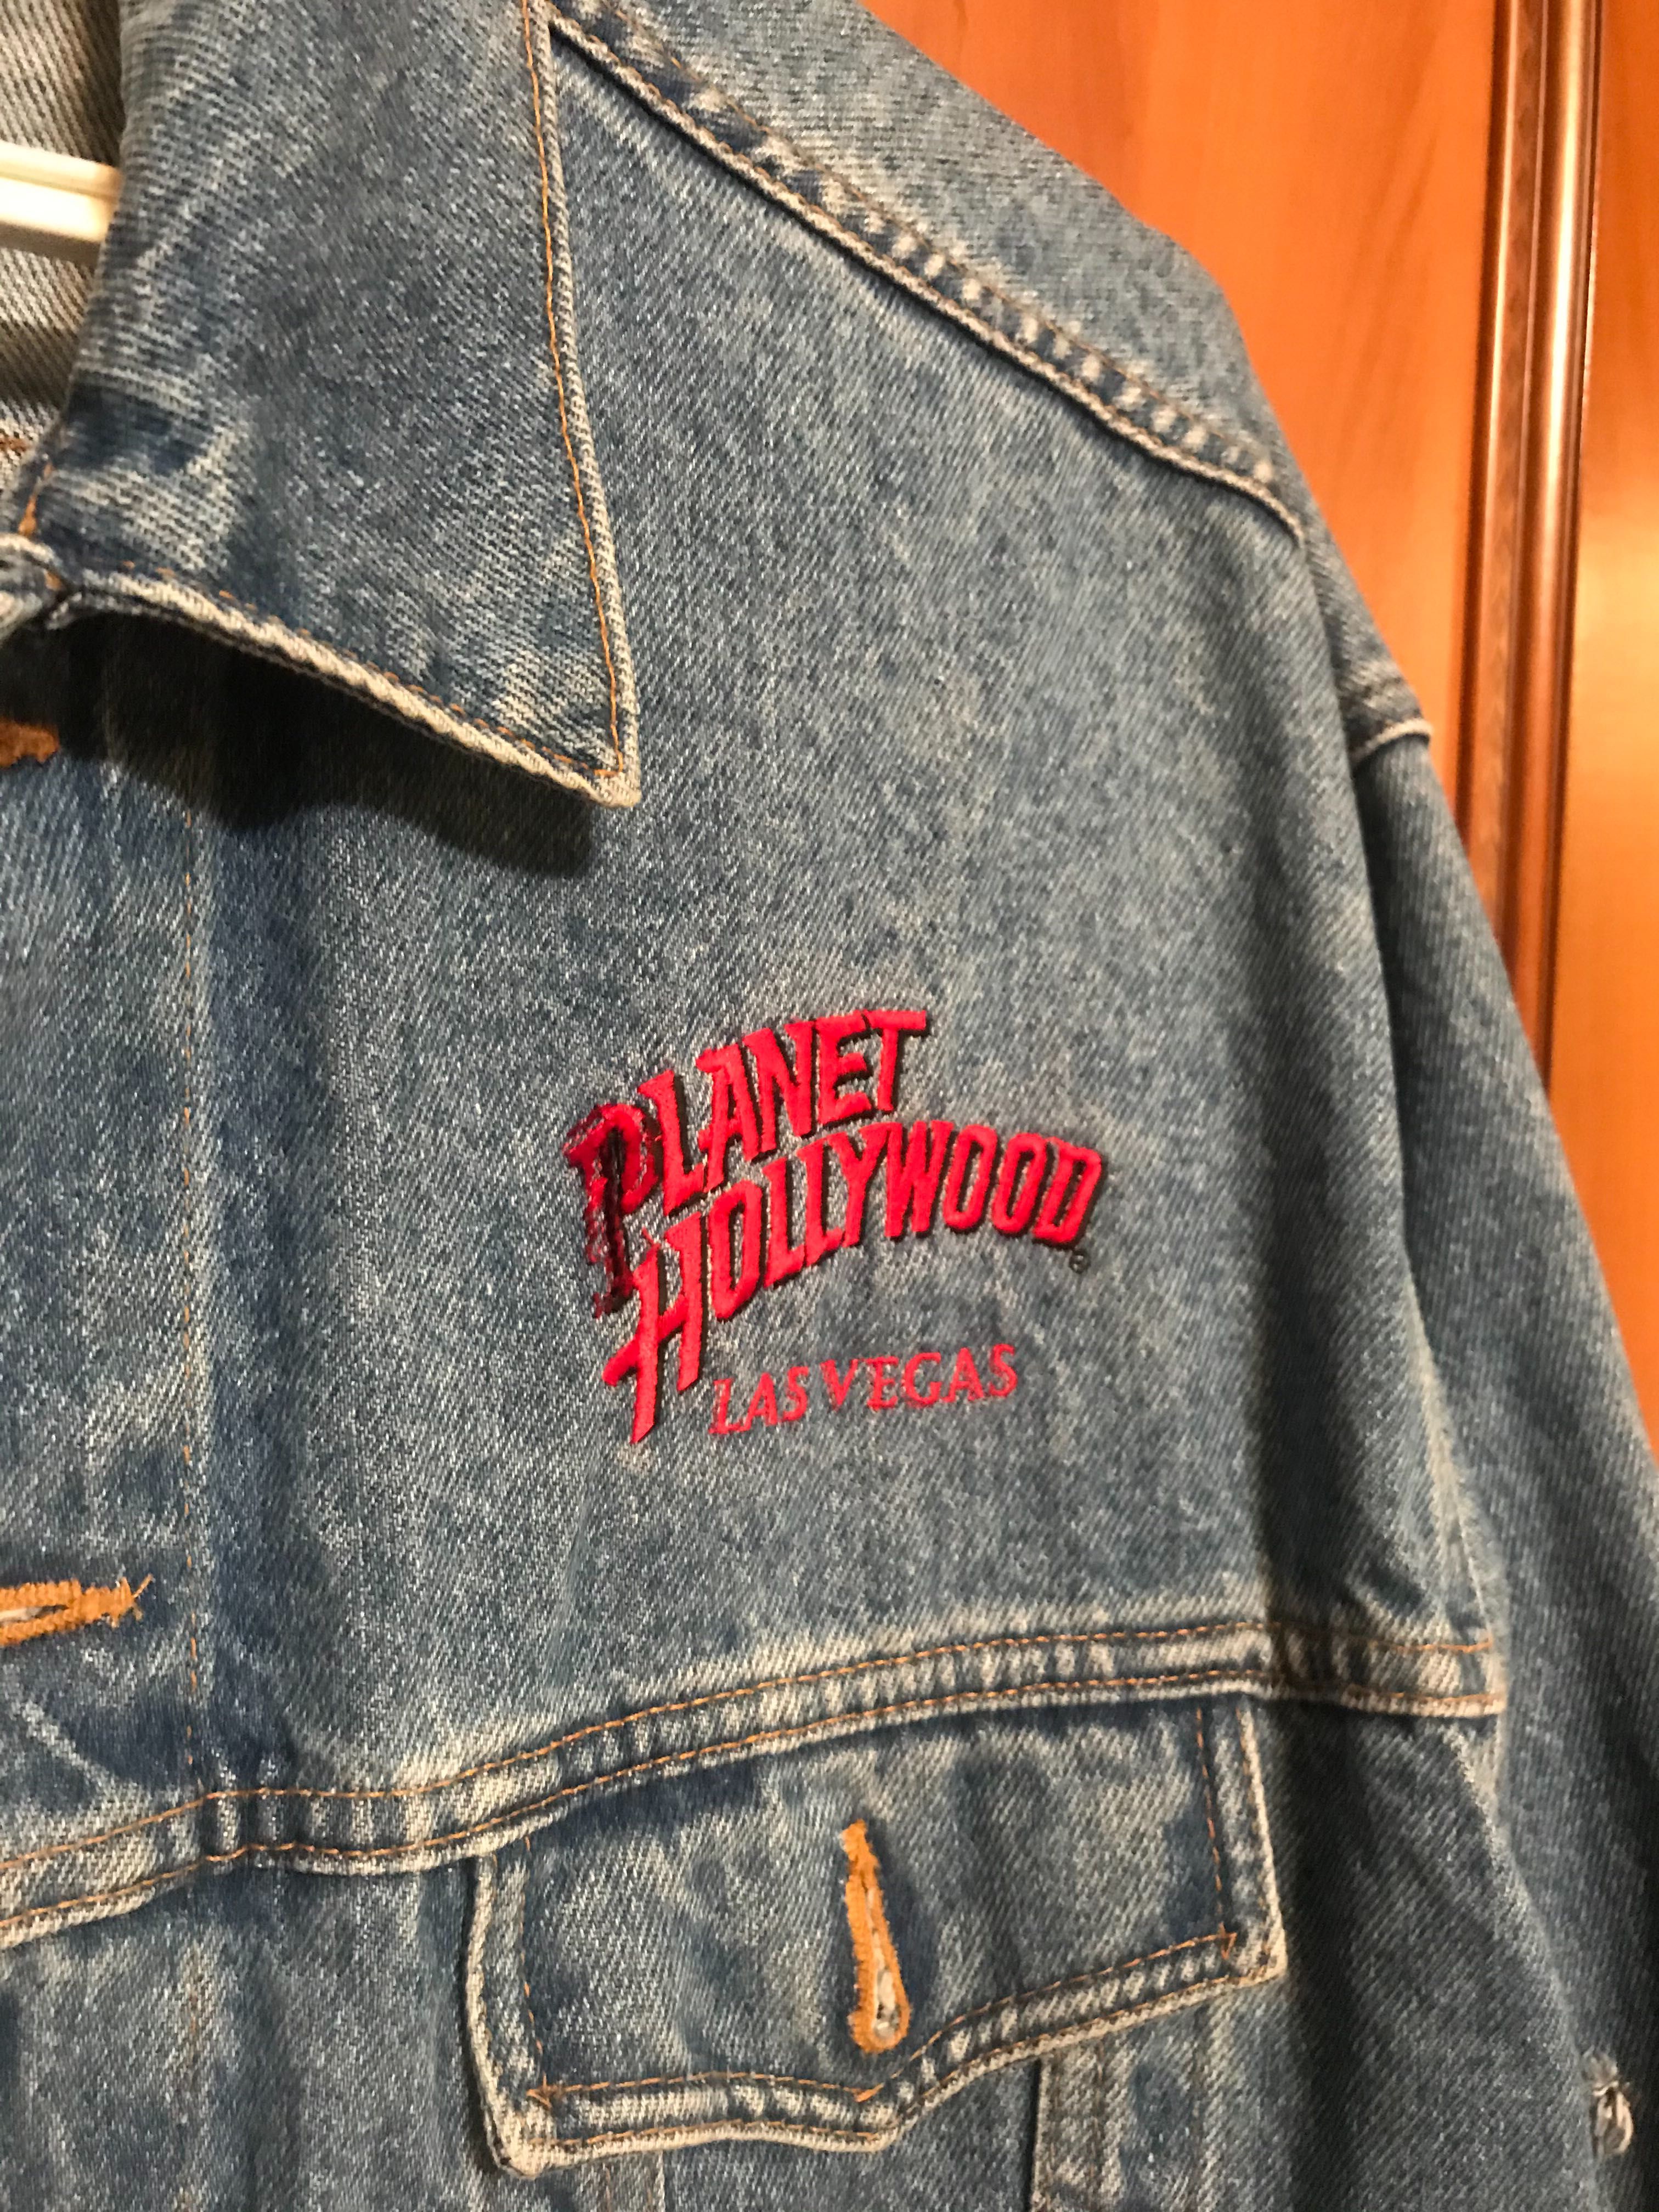 Джинсова куртка Planet Hollywood